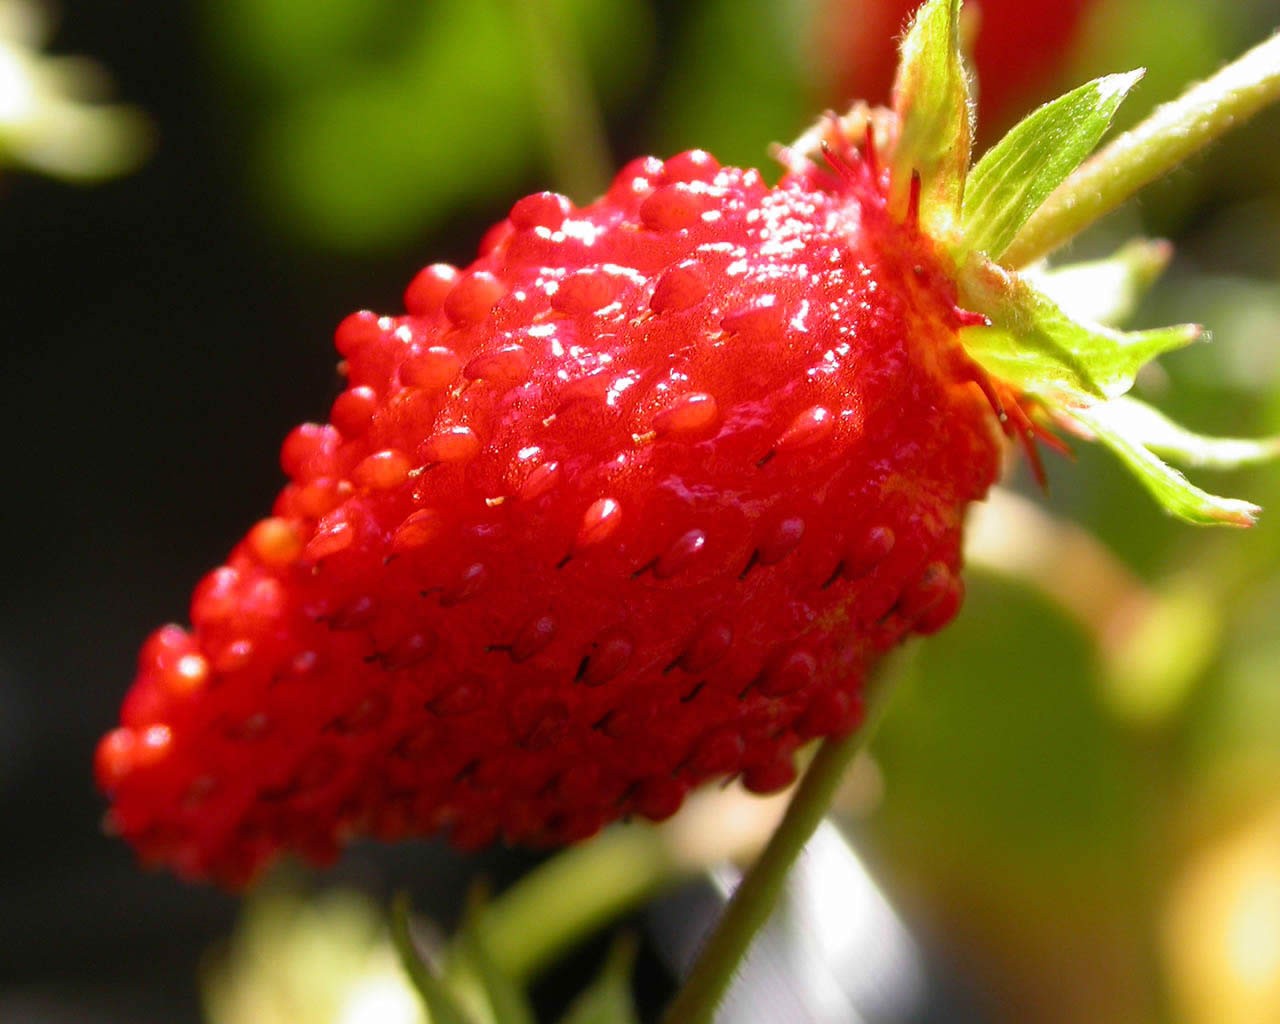 General 1280x1024 strawberries berries nature food fruit red plants